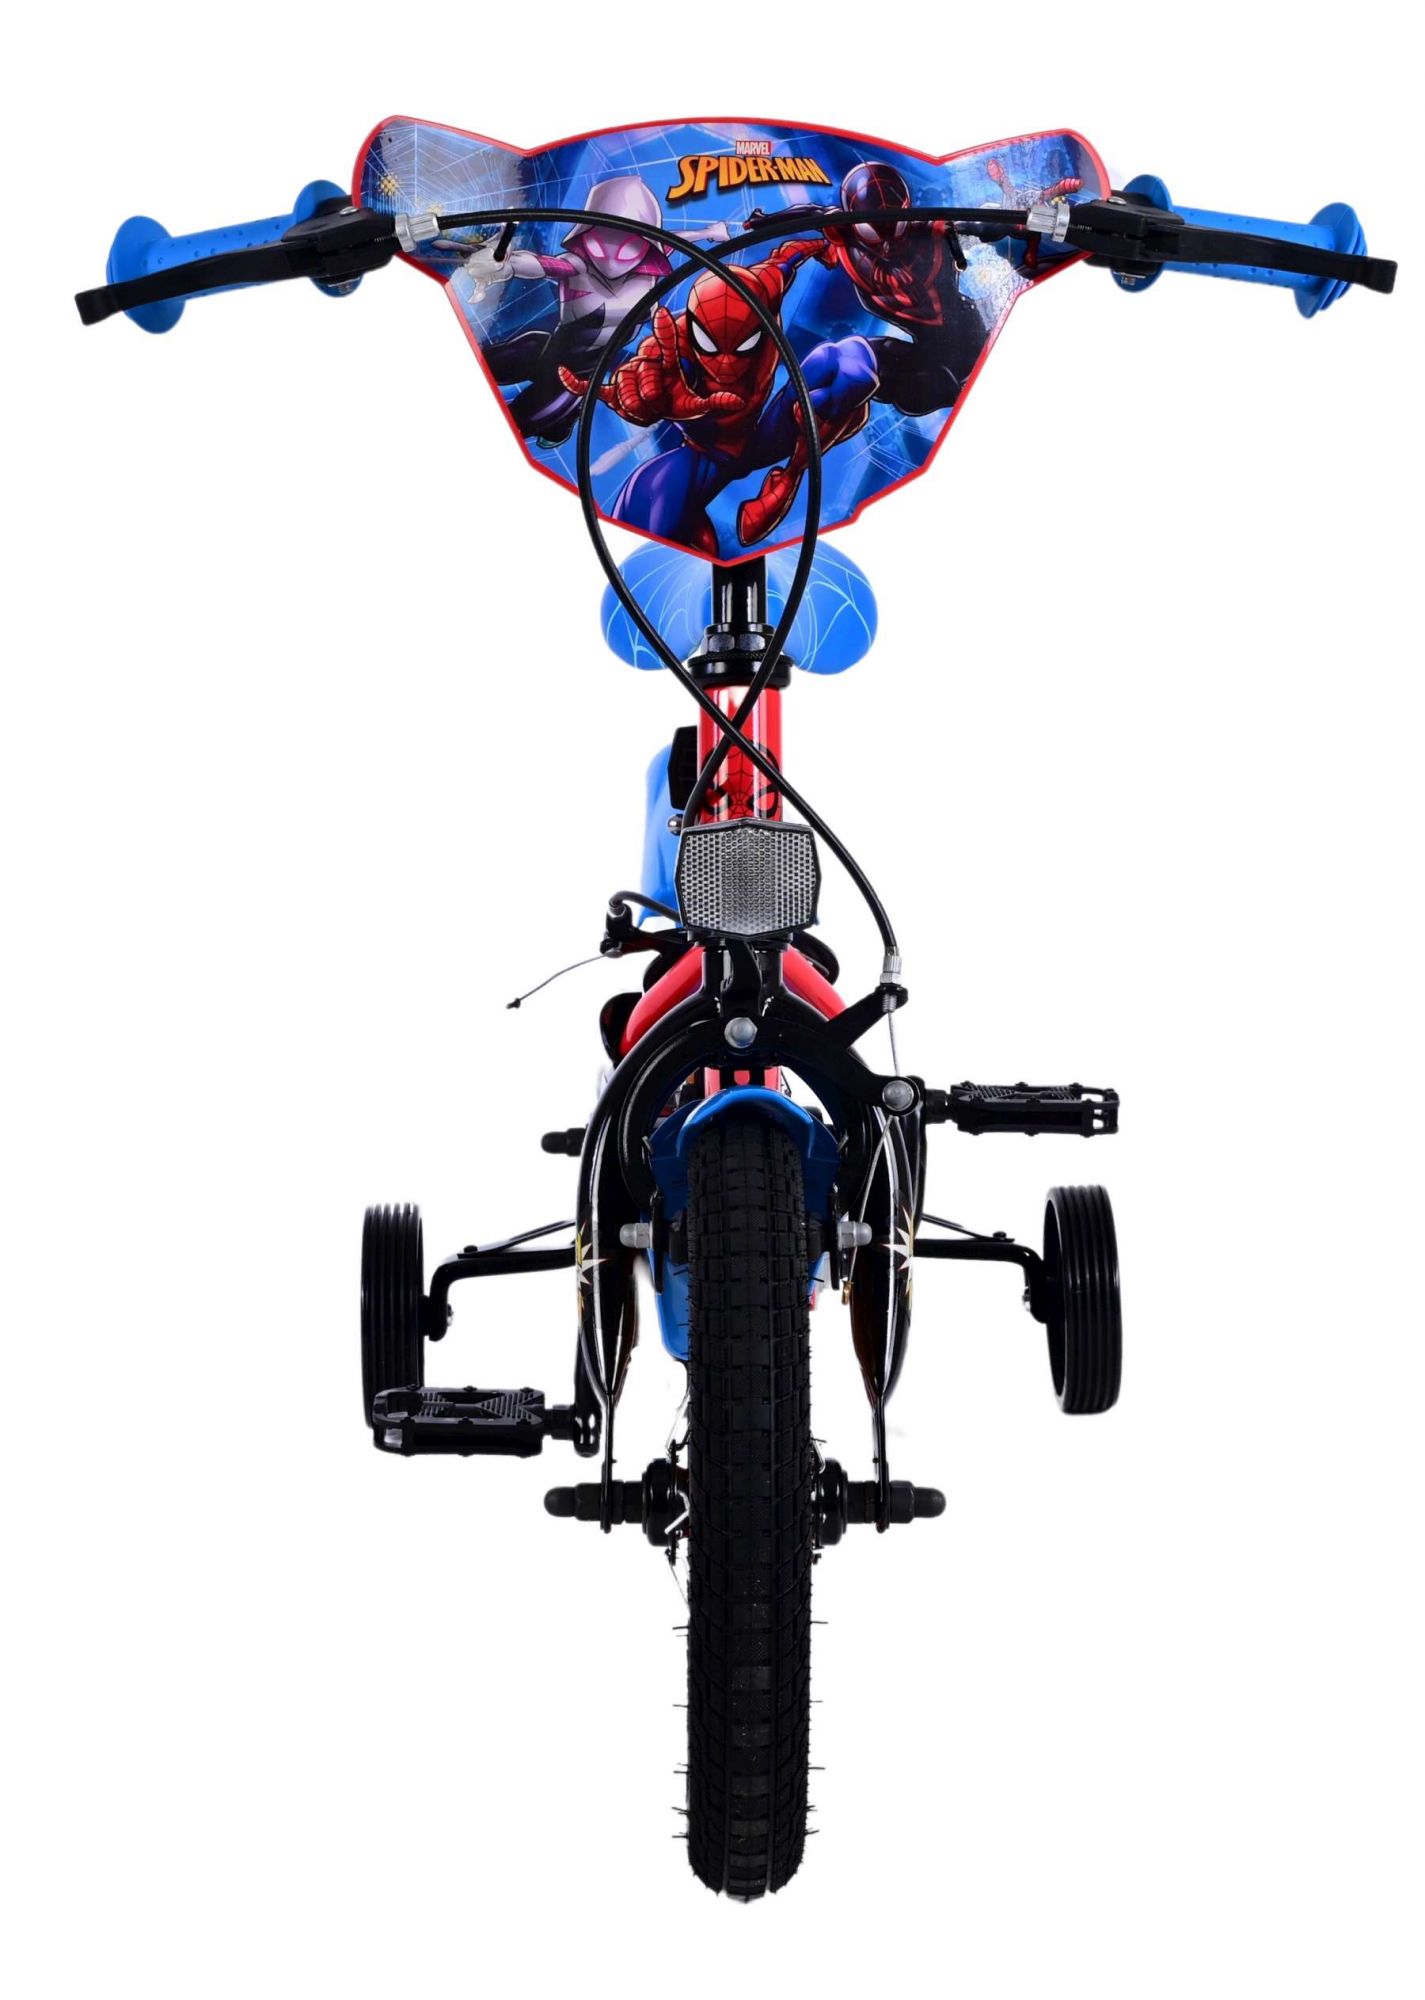 Kinderfahrrad Ultimate Spider-Man Jungen 12 Zoll Kinderrad in Blau/Rot